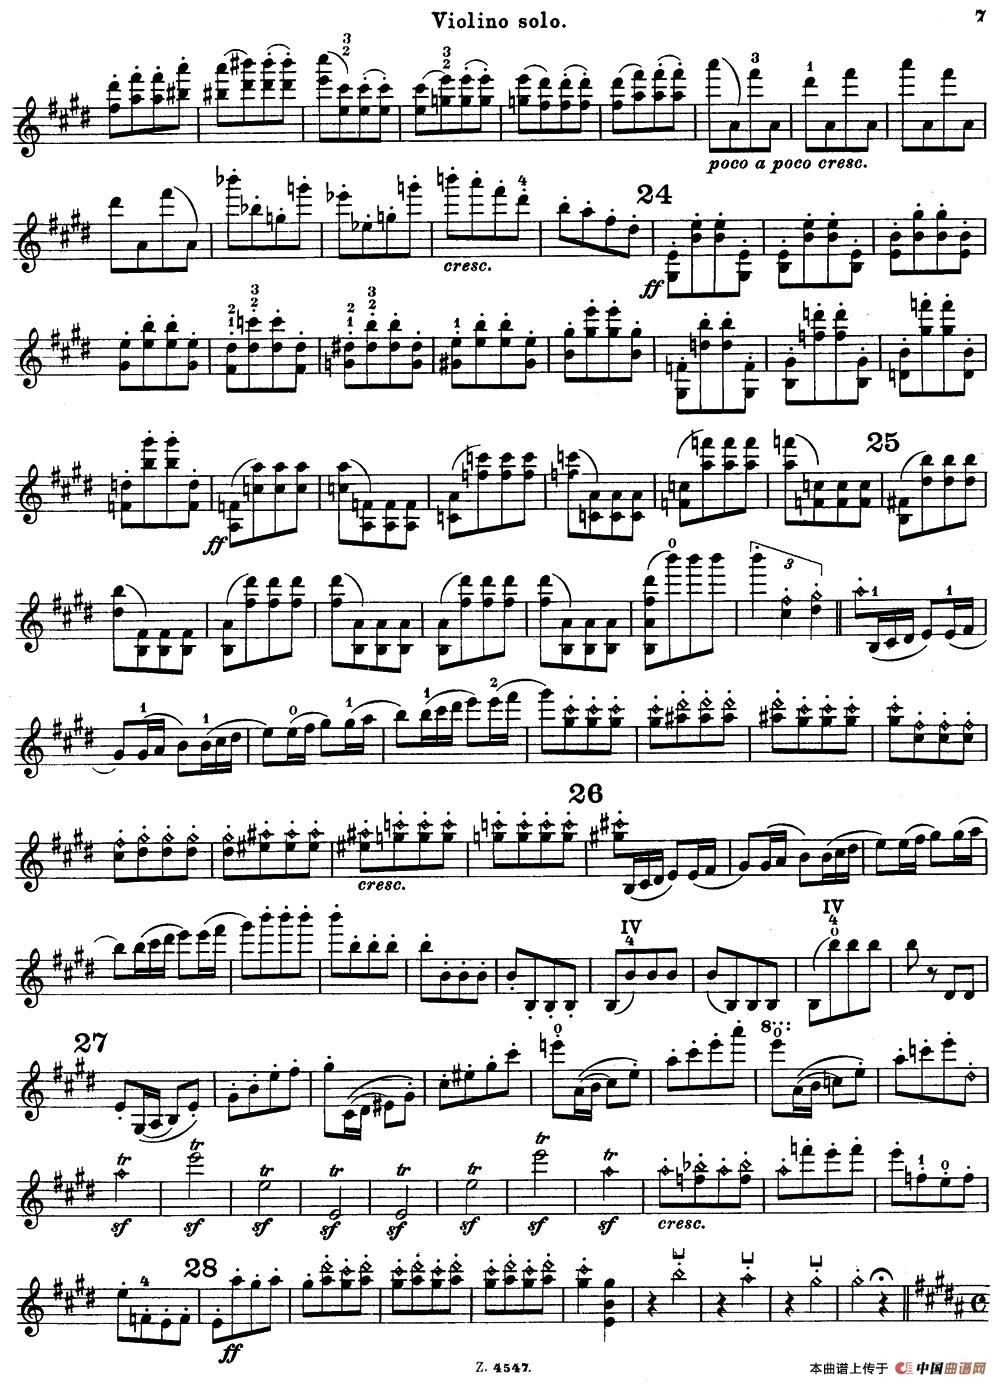 第3号小提琴协奏曲 Op.99（violin concerto no.3）